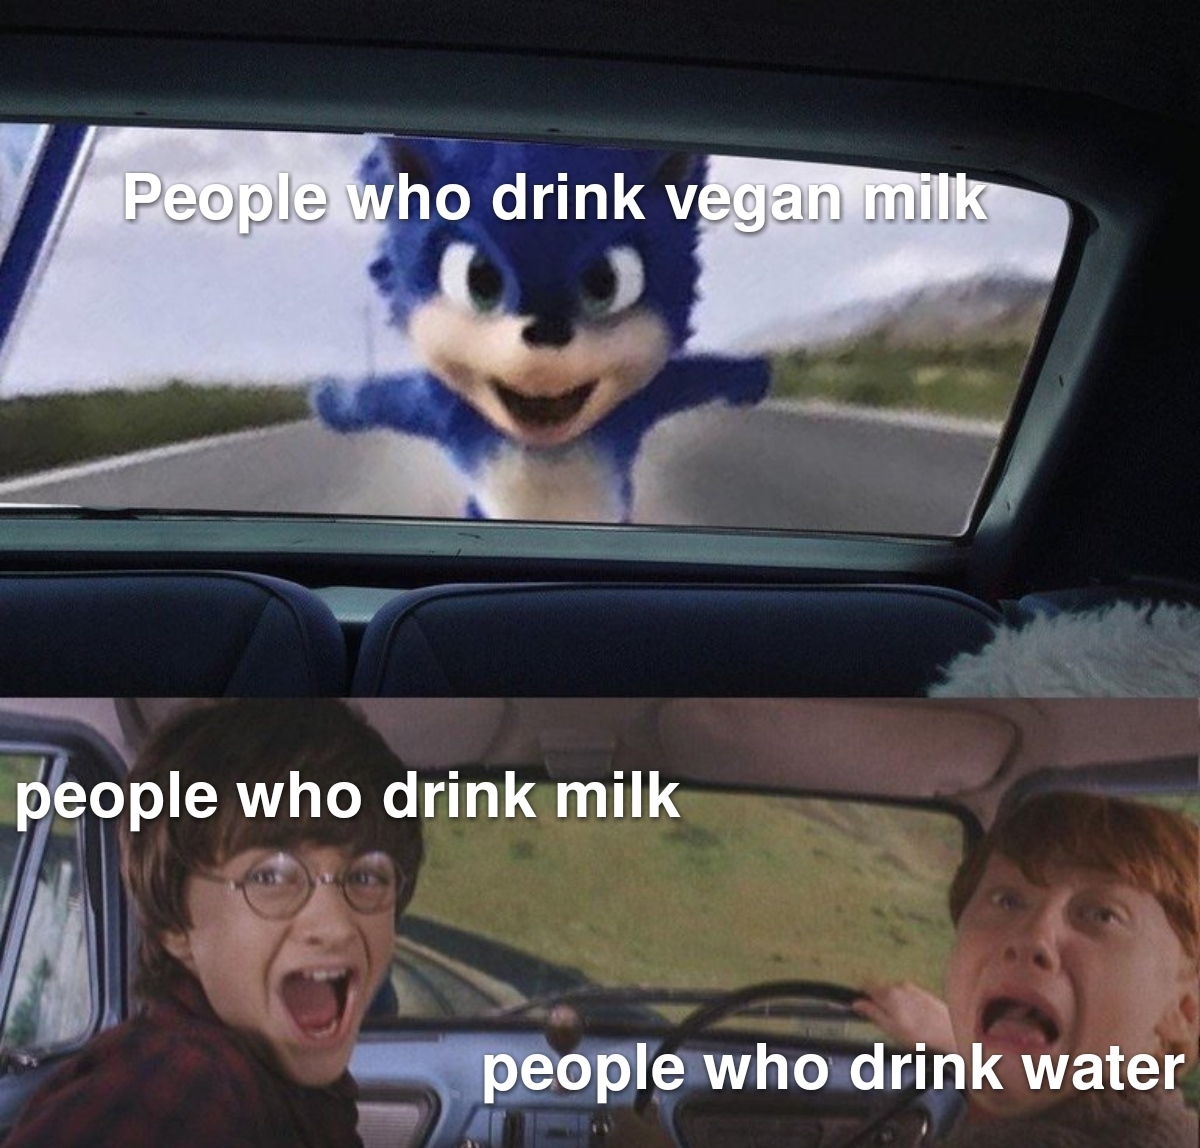 harry potter - People who drink vegan milk people who drink milk people who drink water